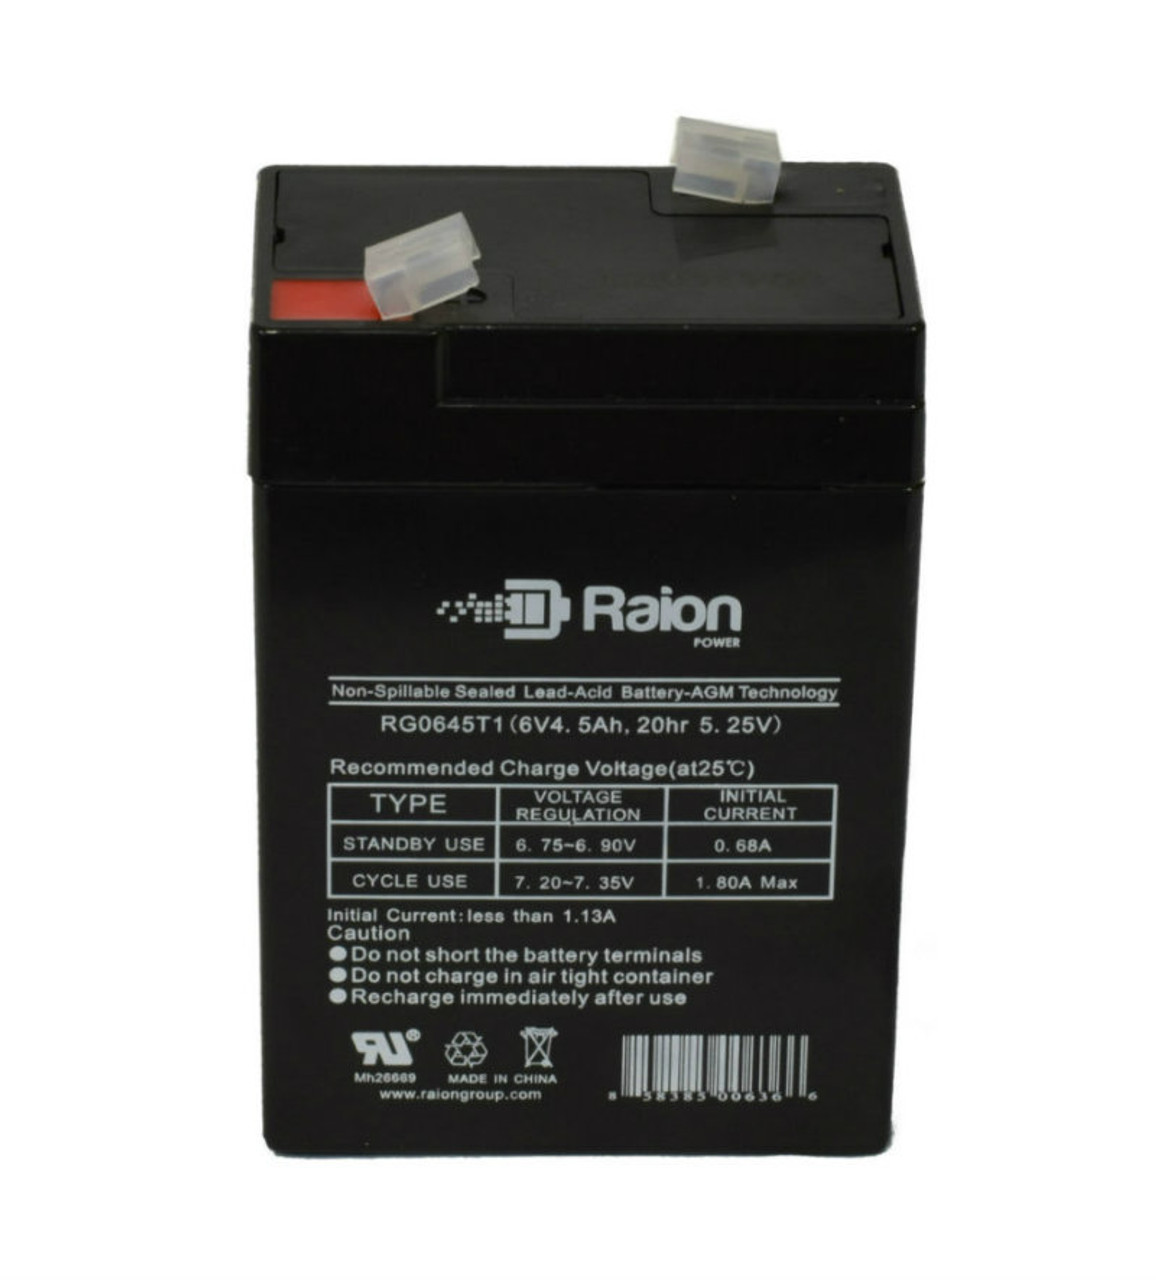 Raion Power RG0645T1 Replacement Battery Cartridge for Vasworld Power GB6-4.5